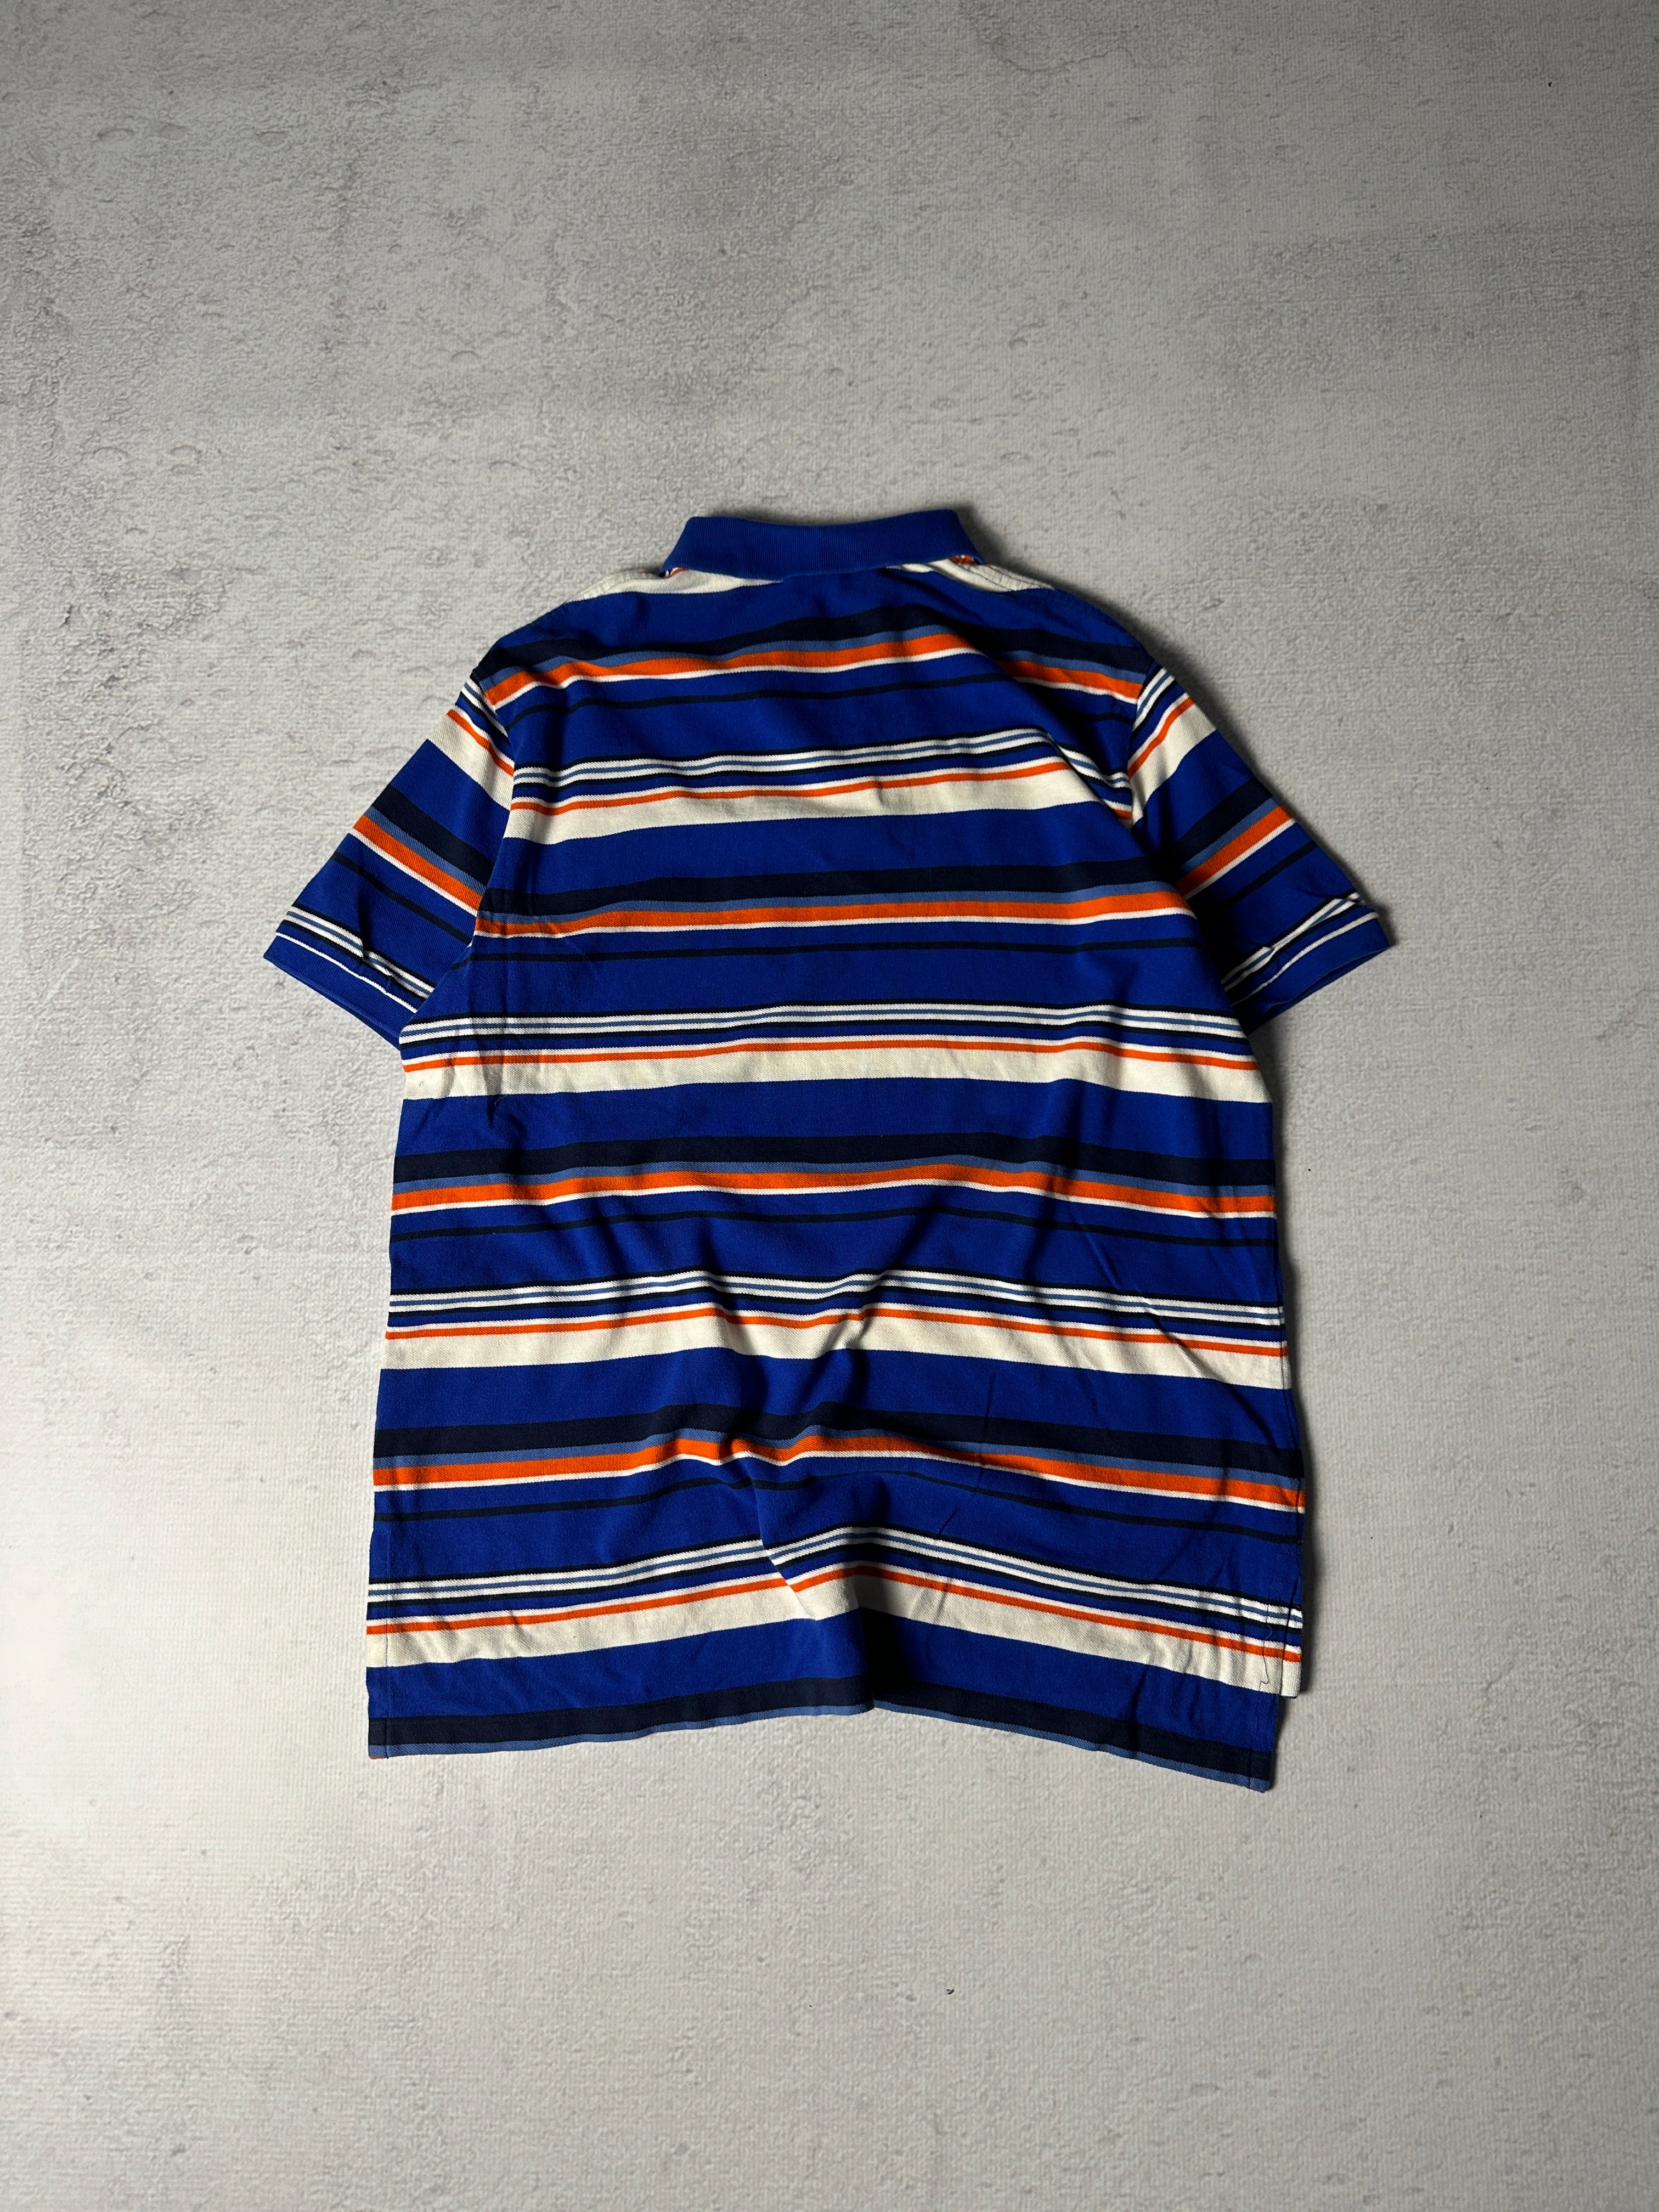 Vintage Polo Ralph Lauren Striped Polo Shirt - Men's XL